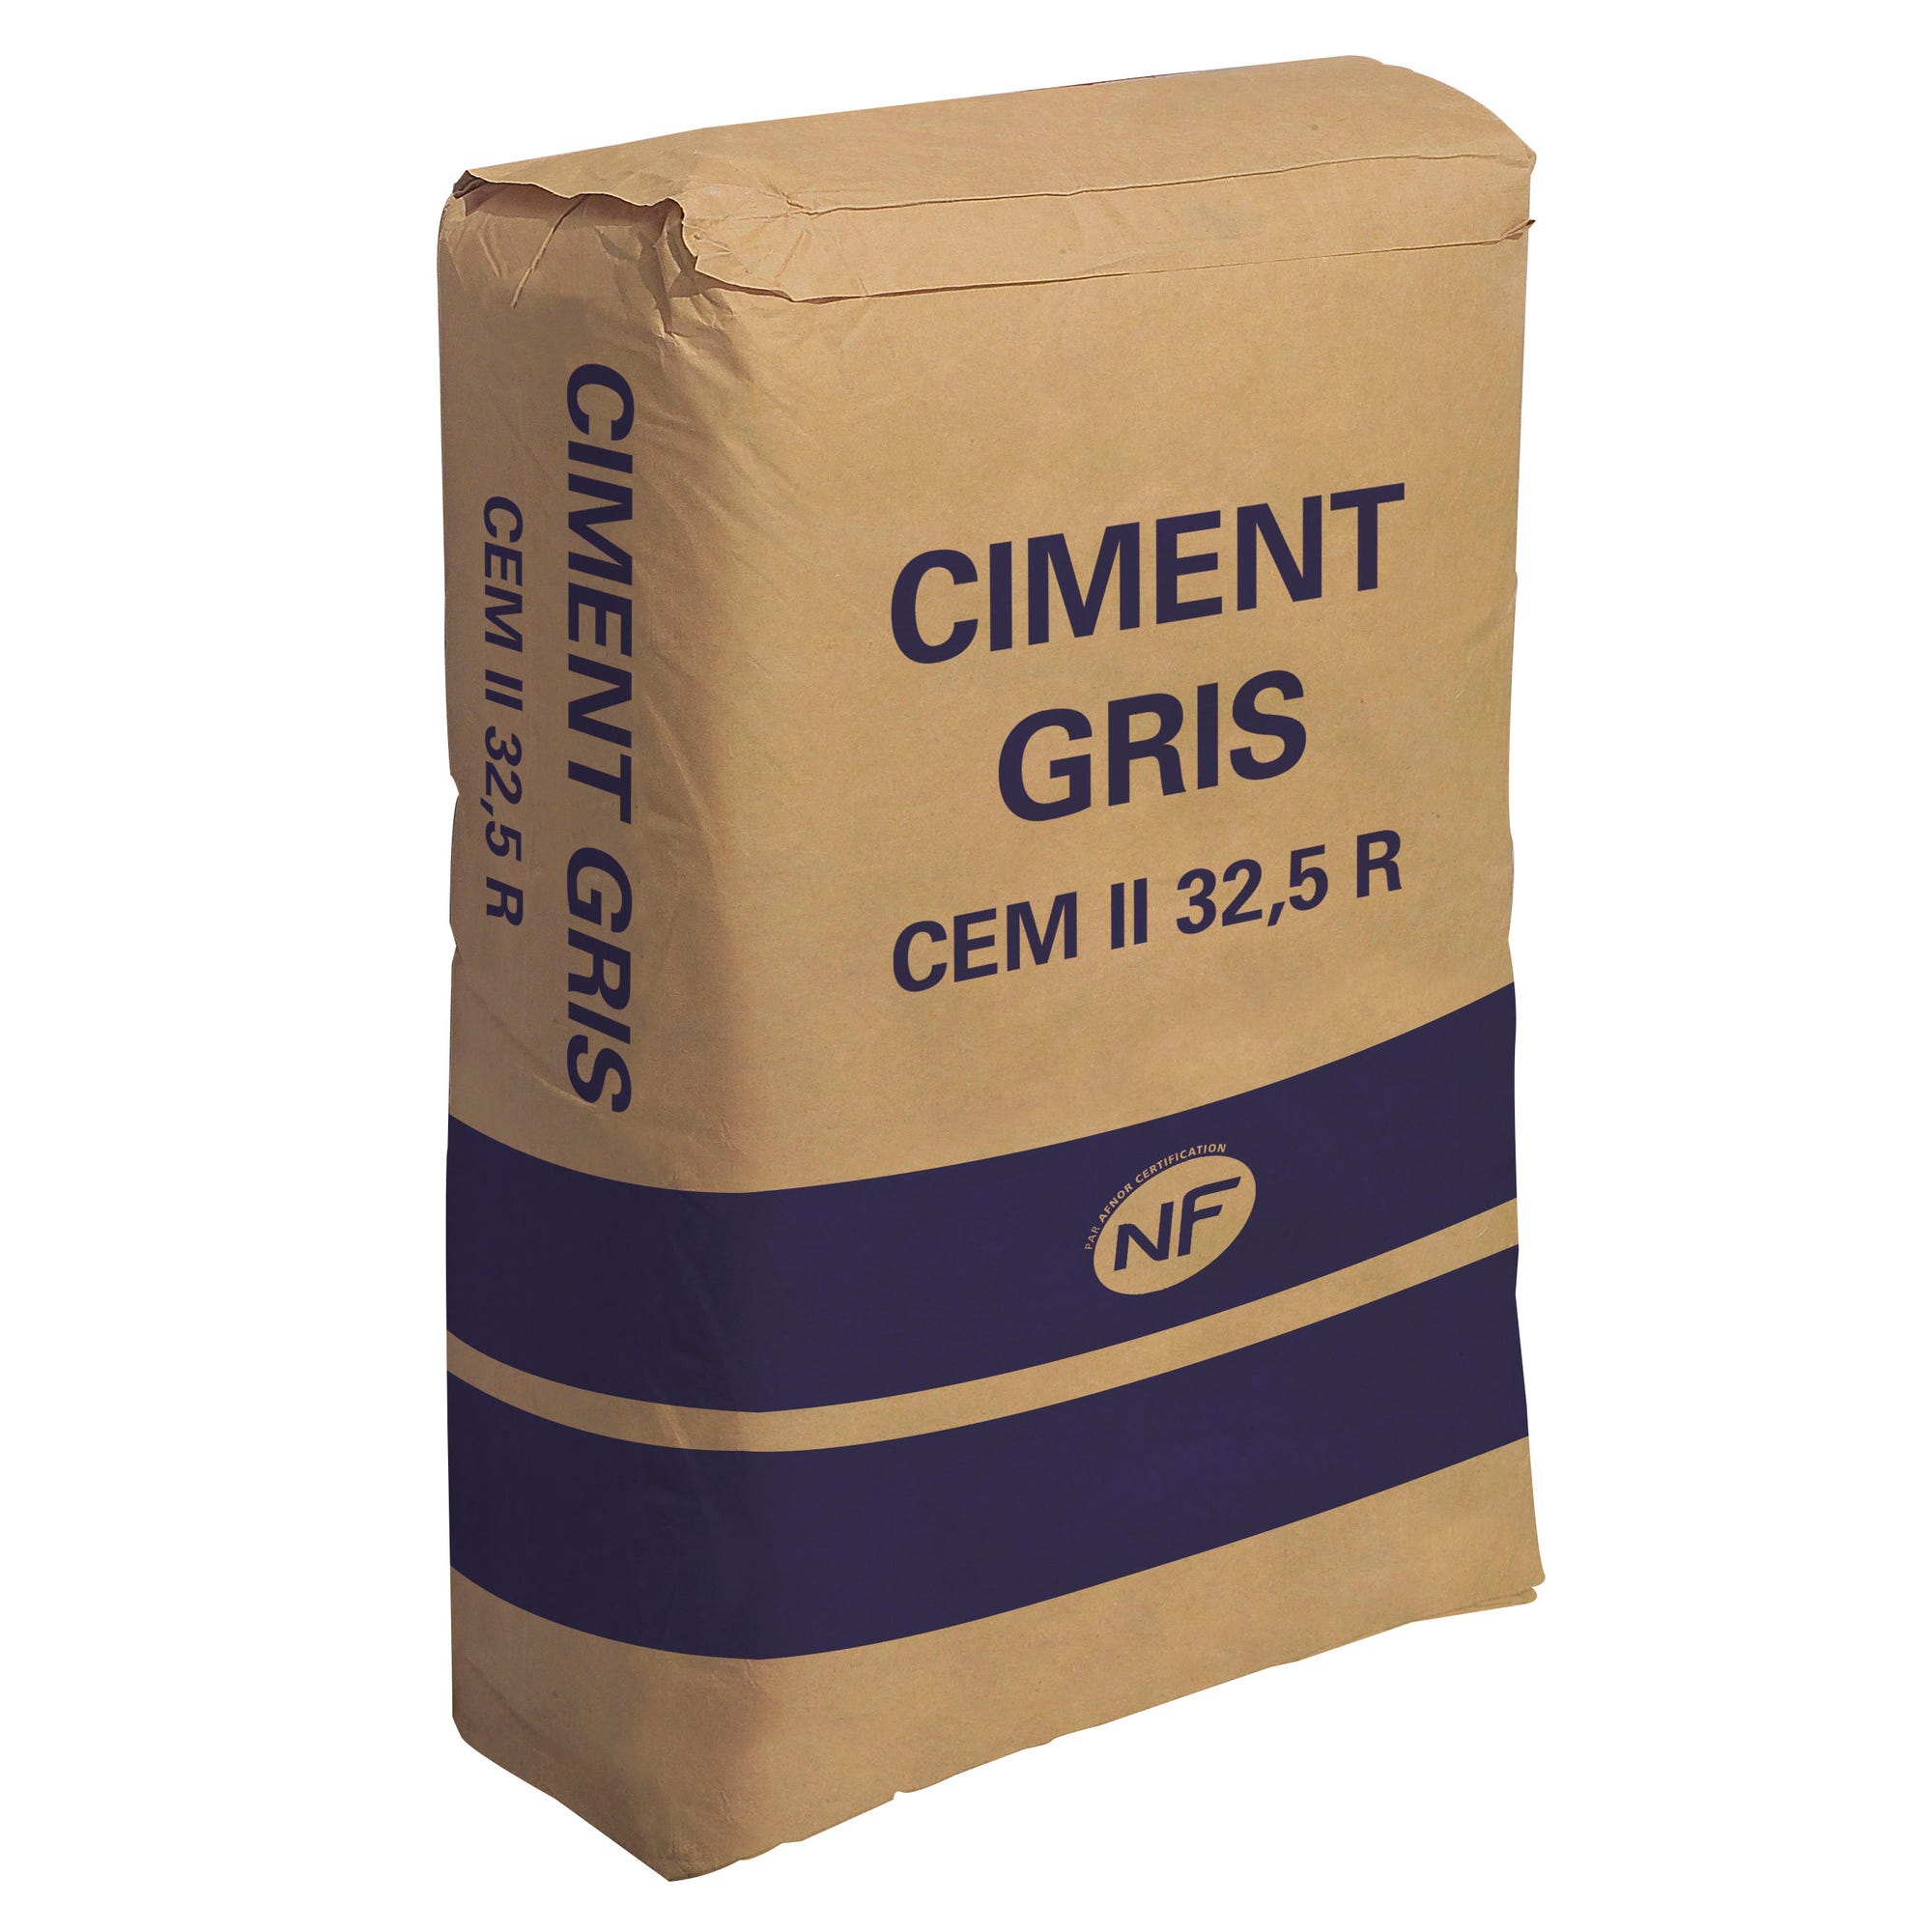 Ciment gris ied Cemii 32.5 NF 25 kg 0